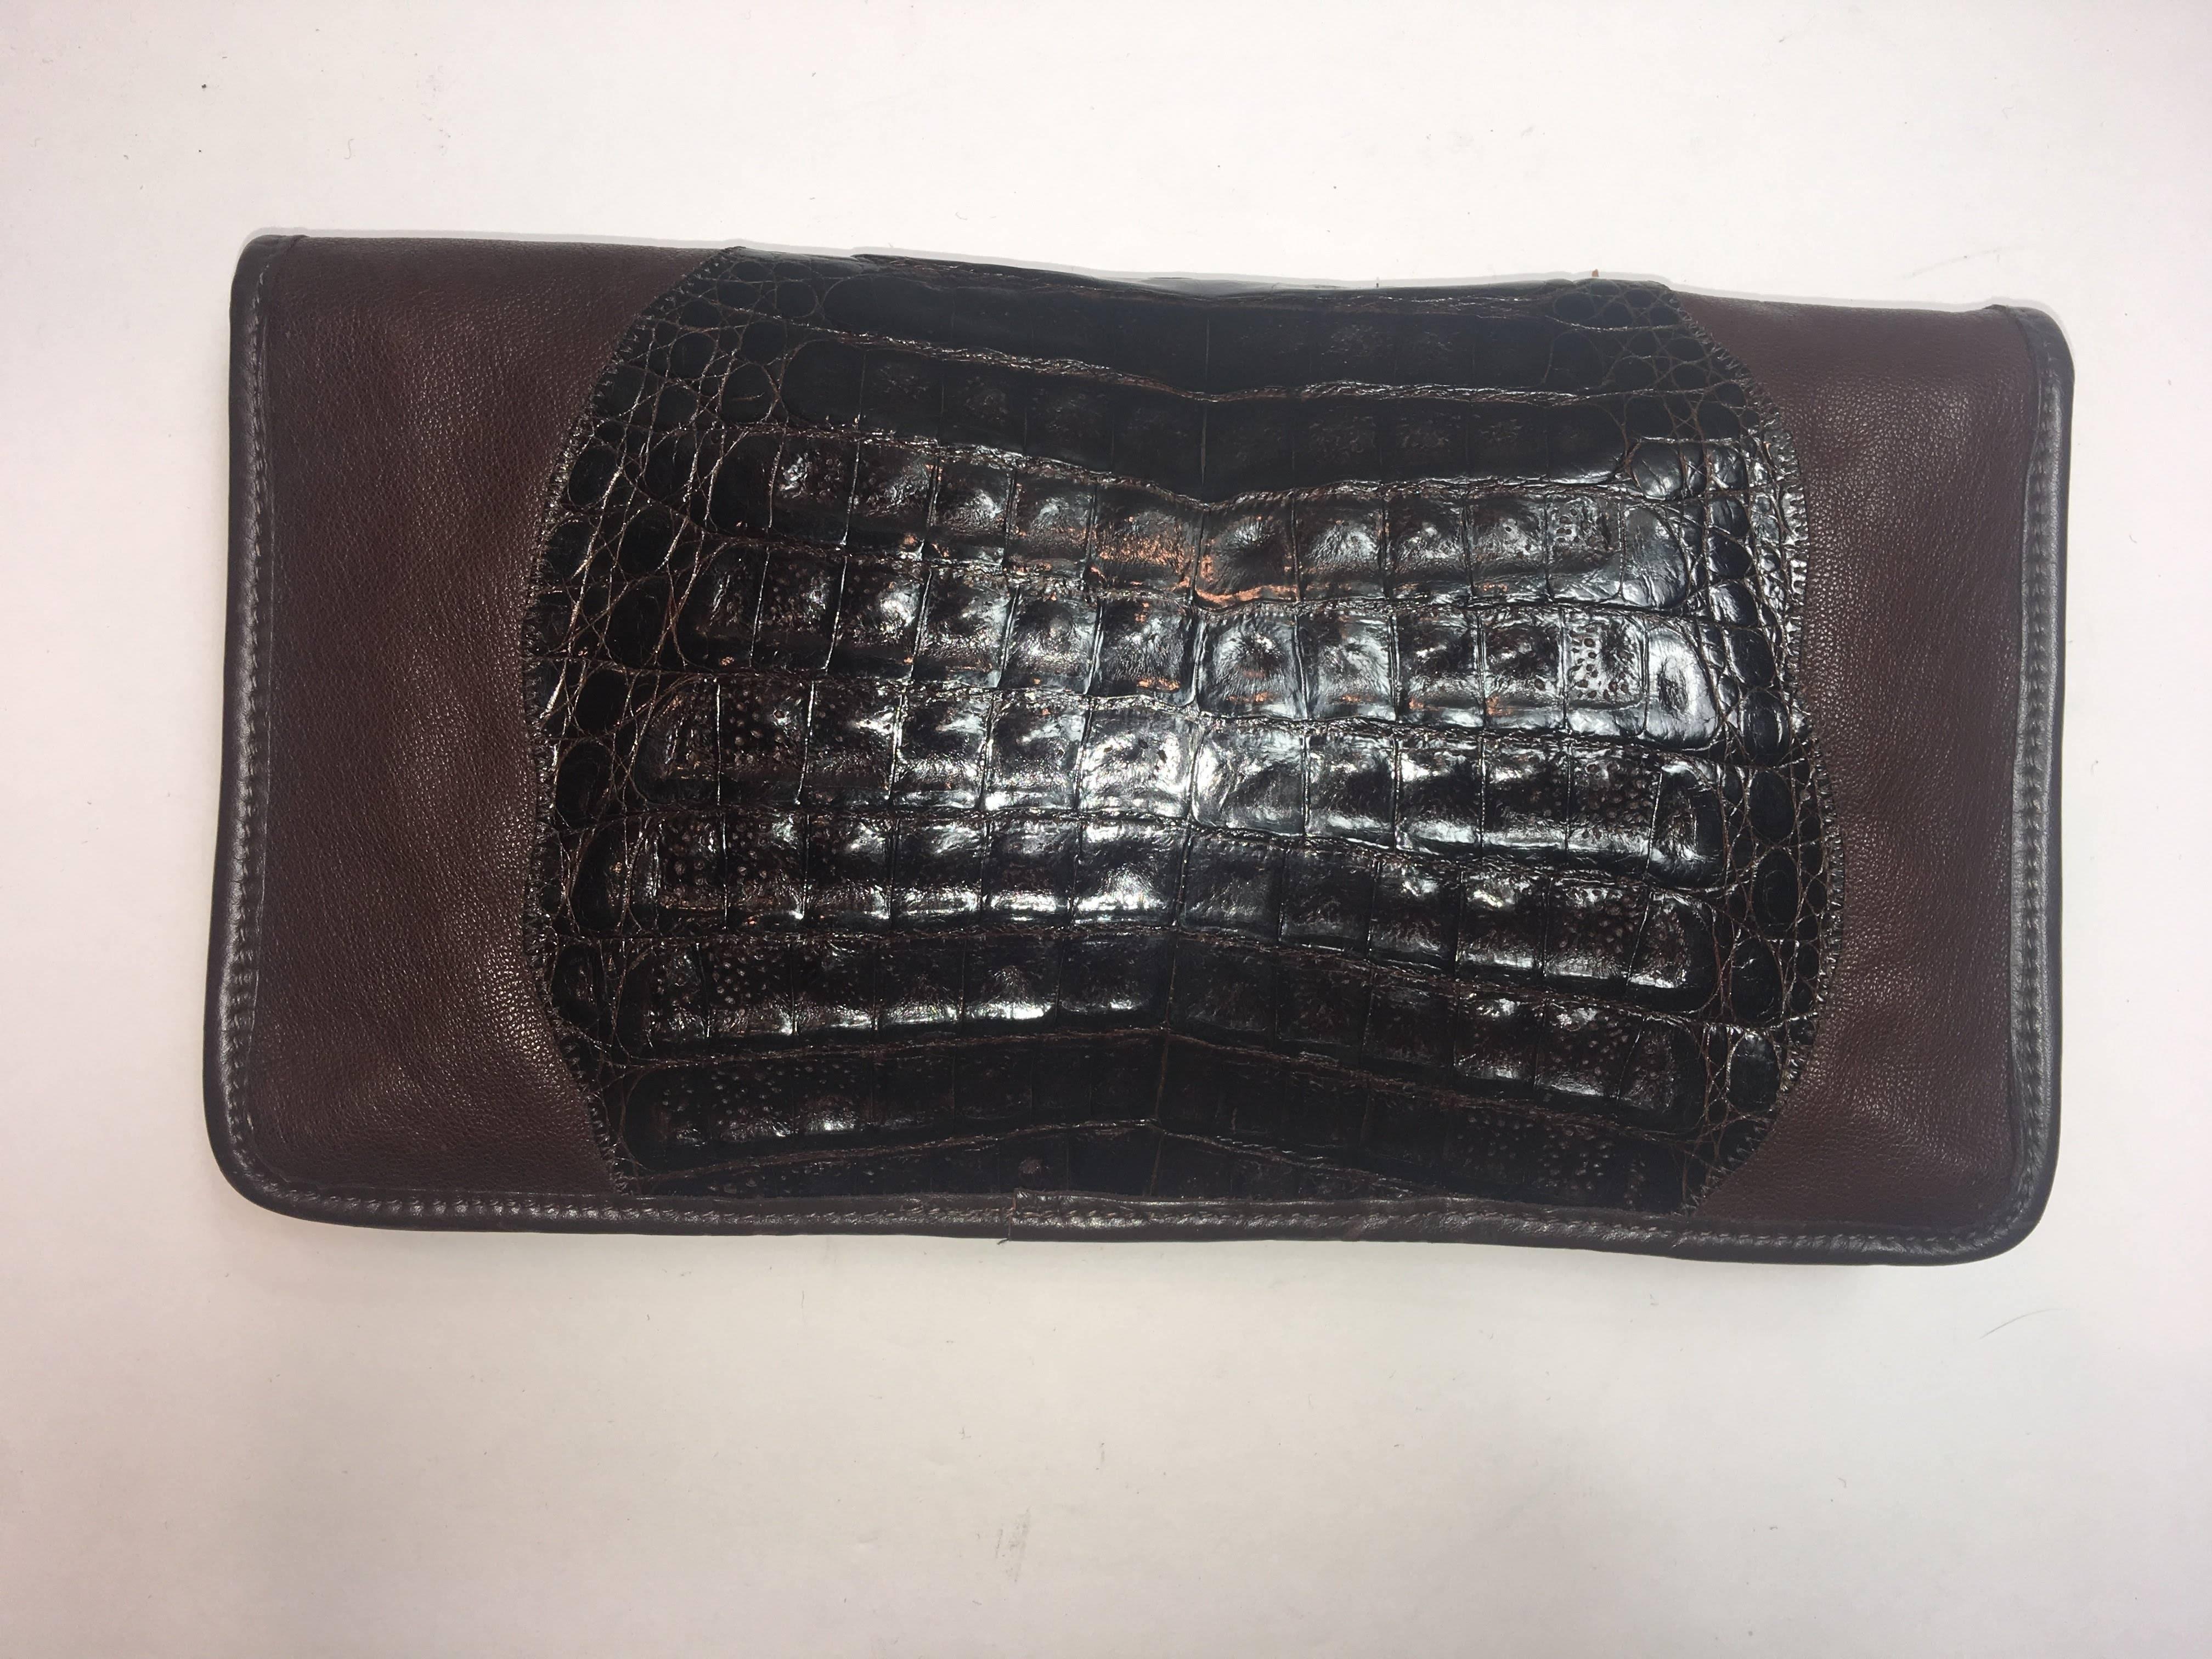 Carlos Falchi Leather Clutch with Alligator Detail. 